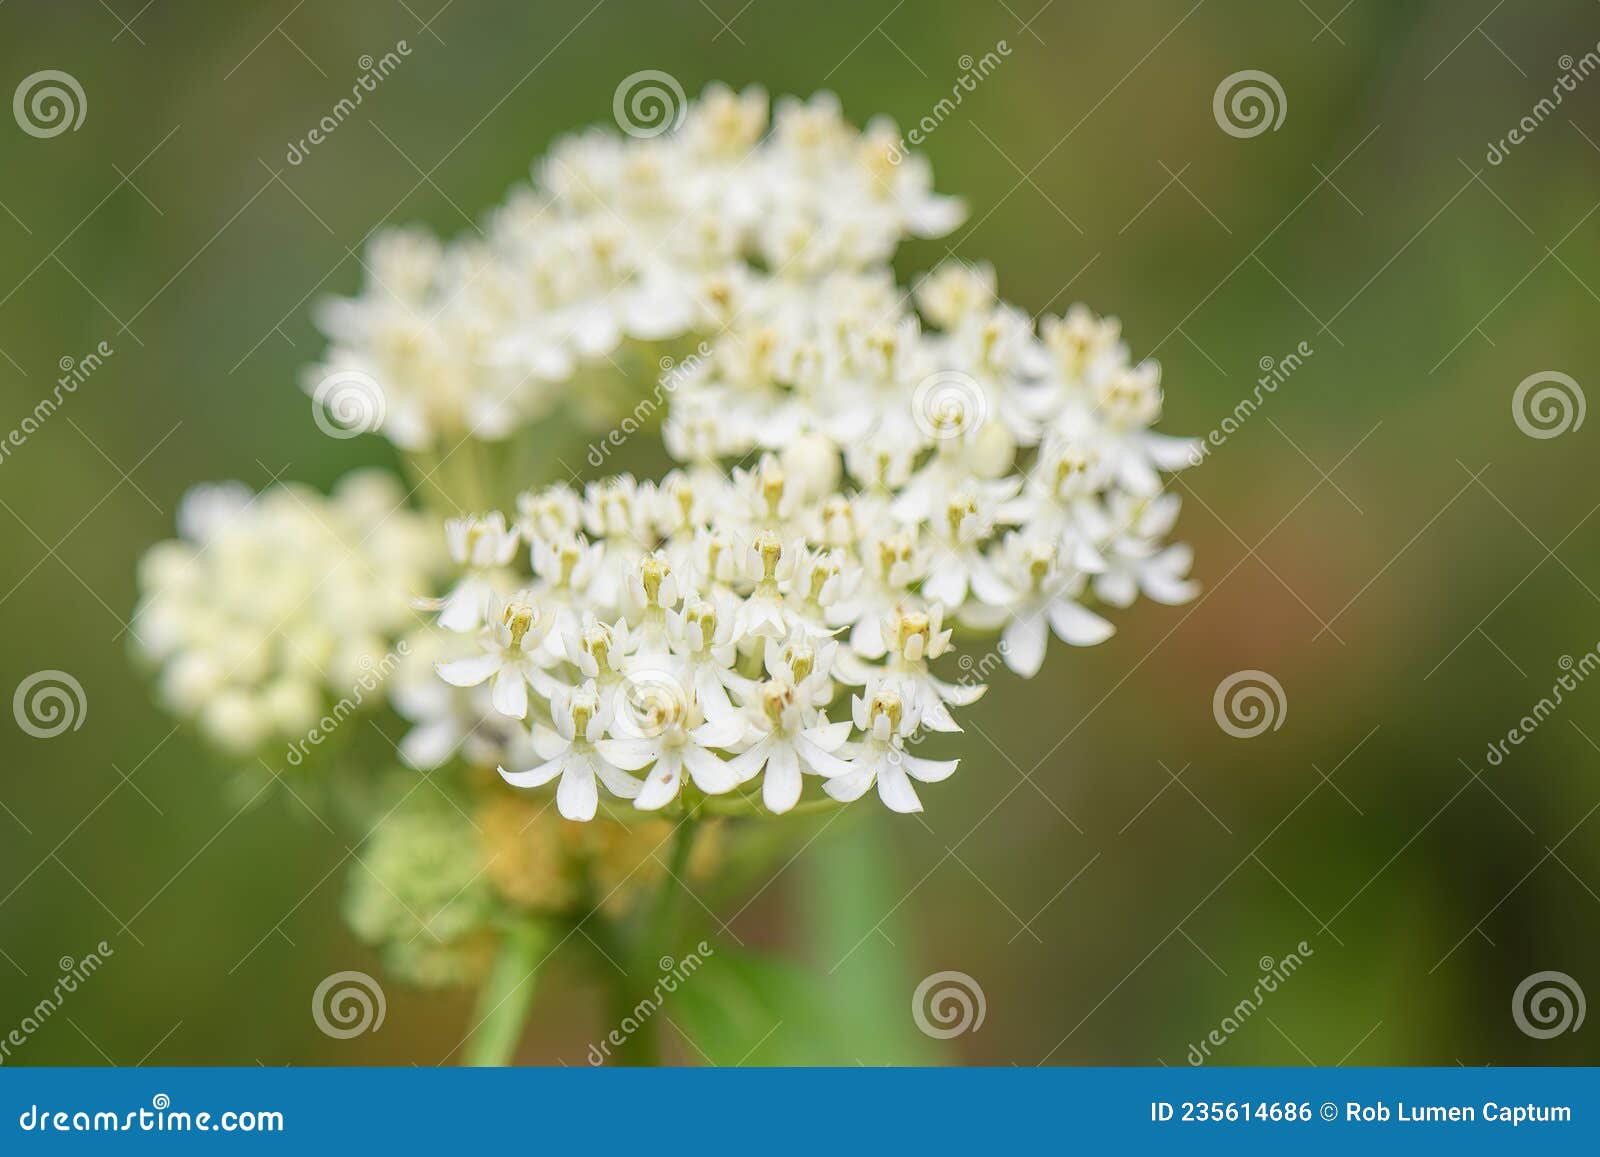 white swamp milkweed asclepias incarnata ice ballet, white flowers